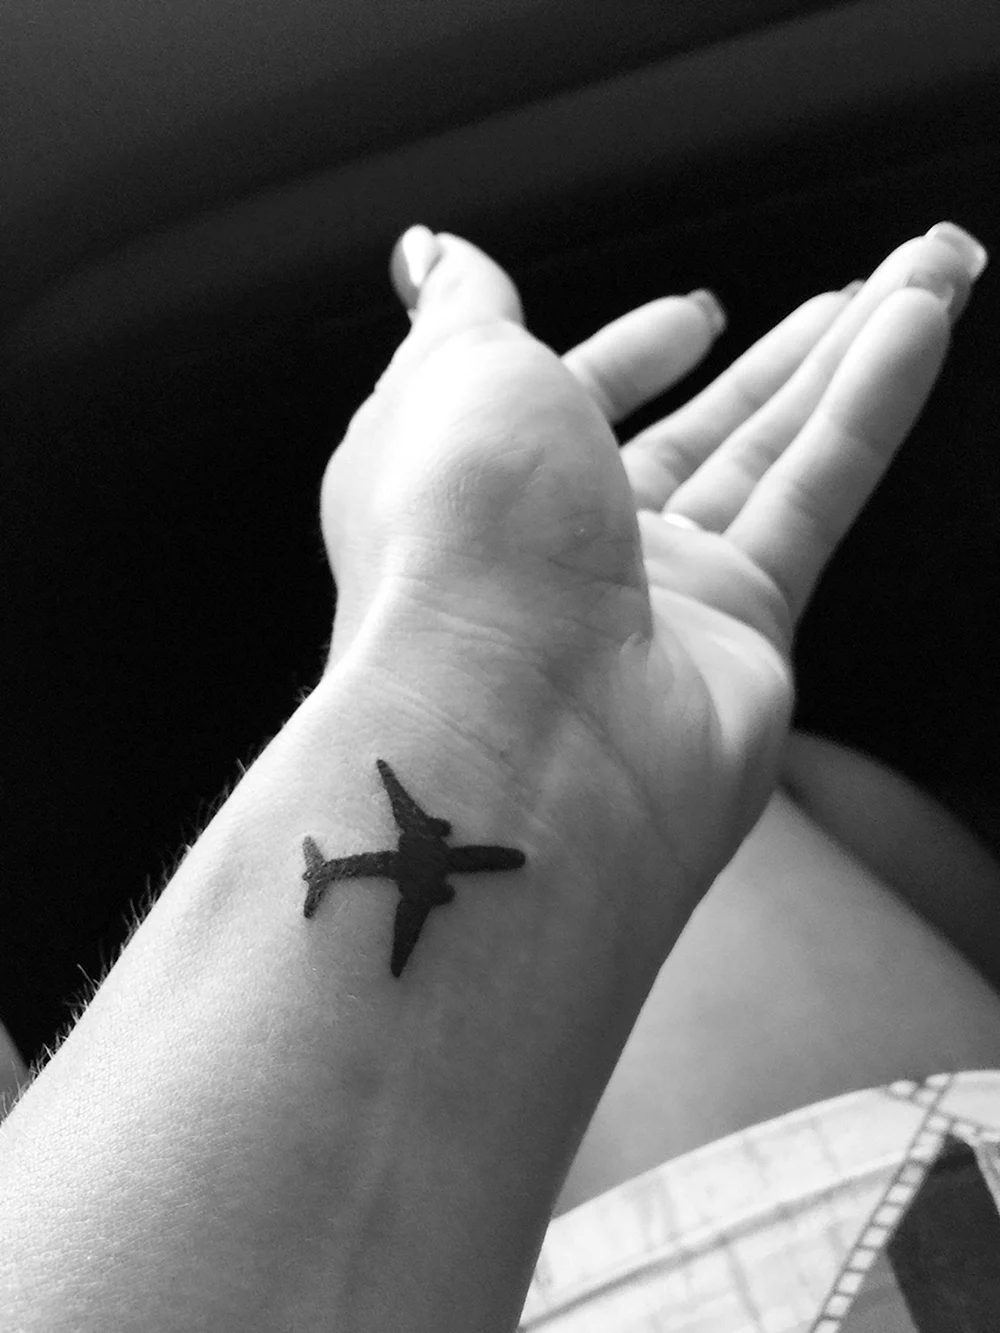 Plane Tattoo